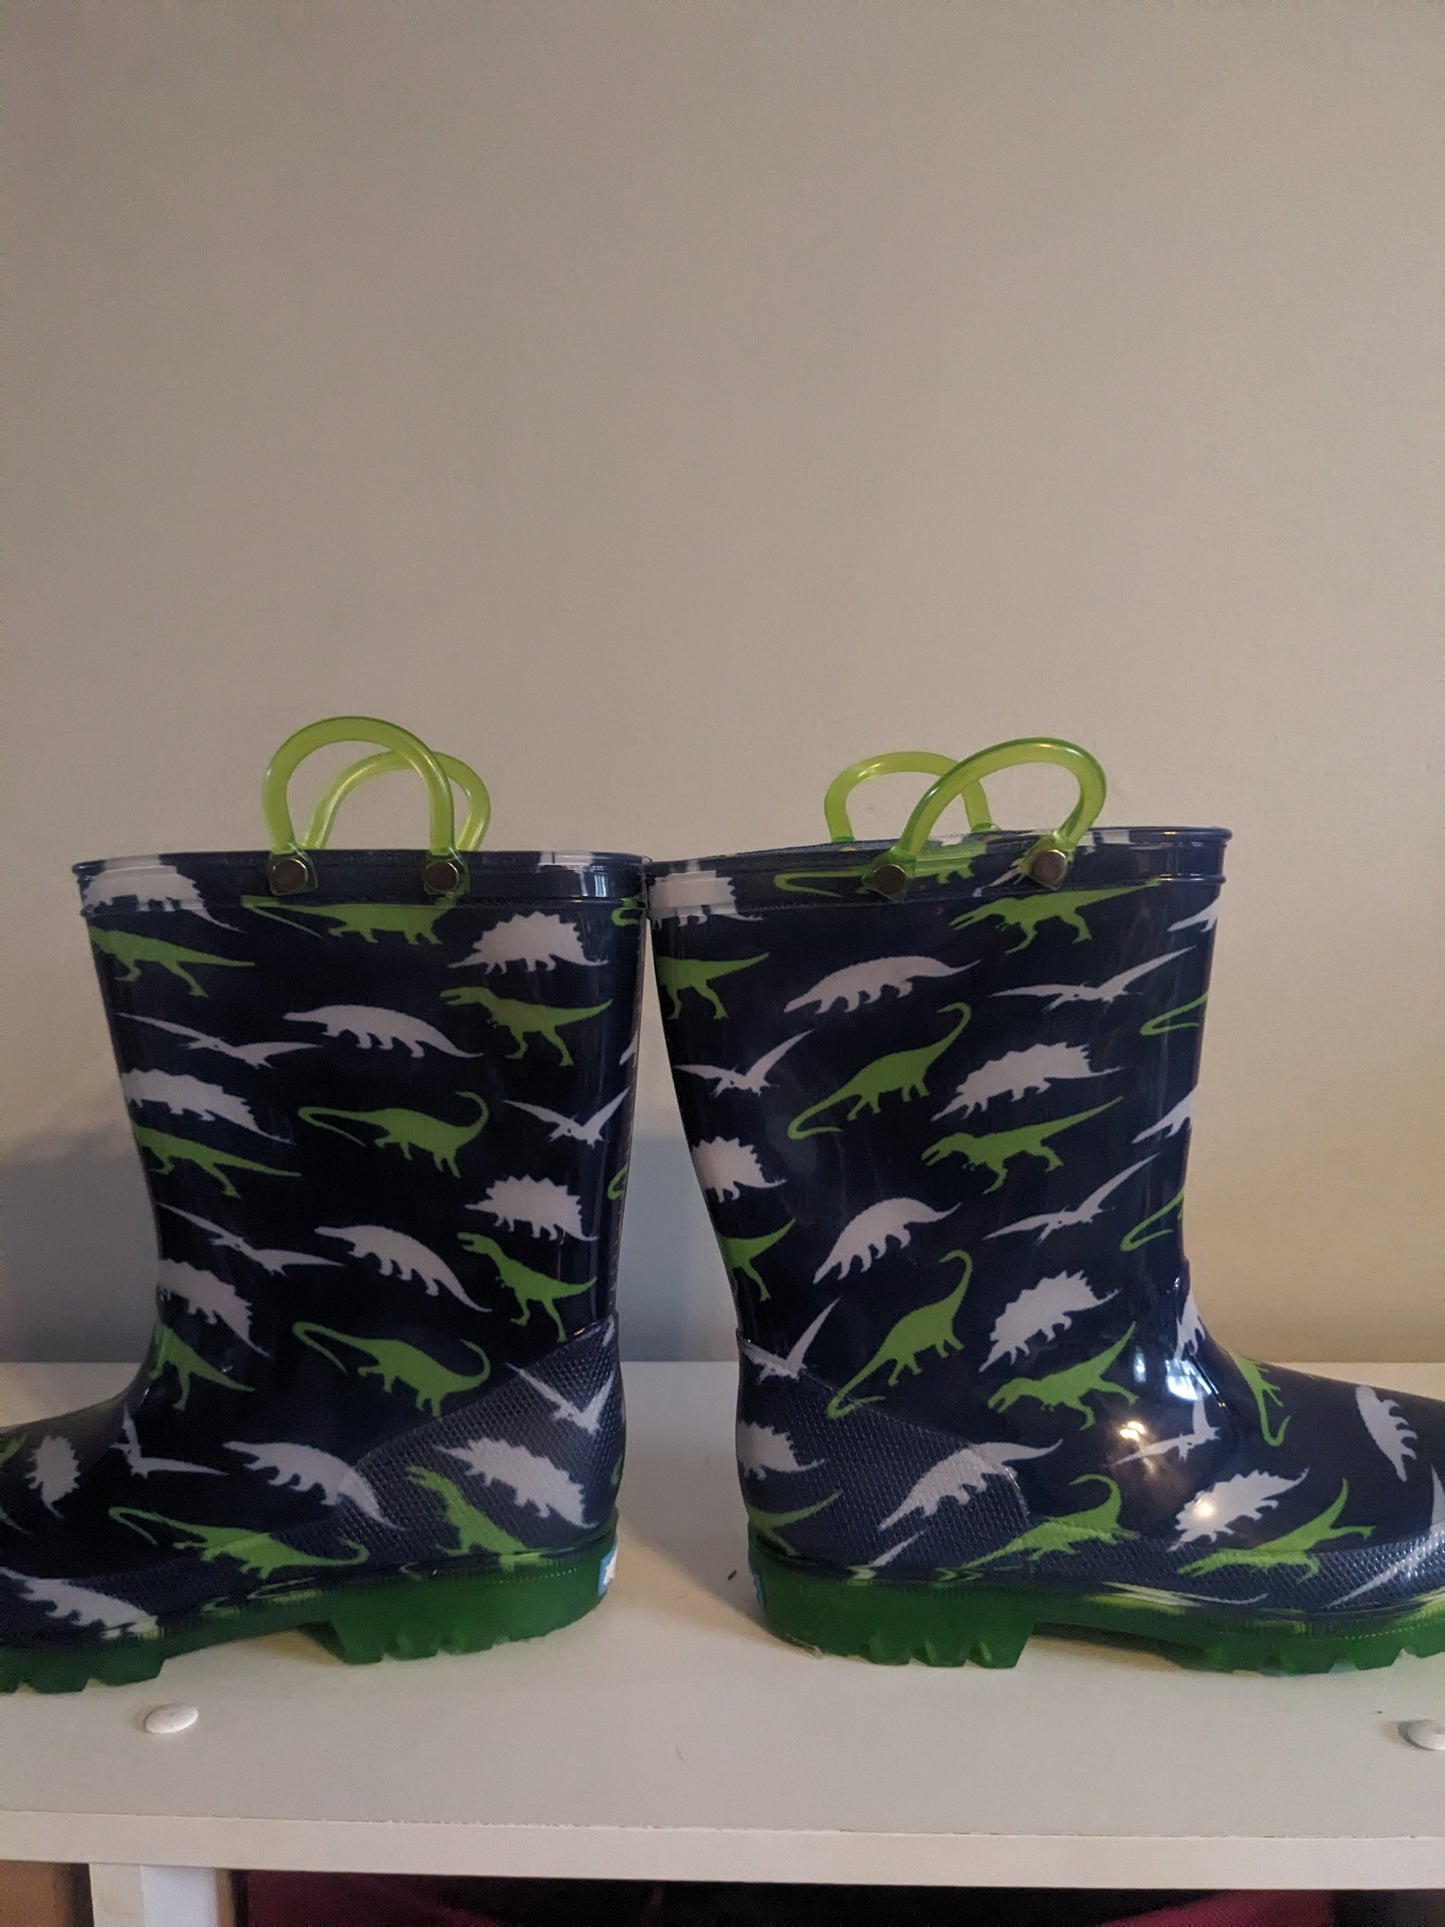 Light up Dinosaur rain boots size 1c